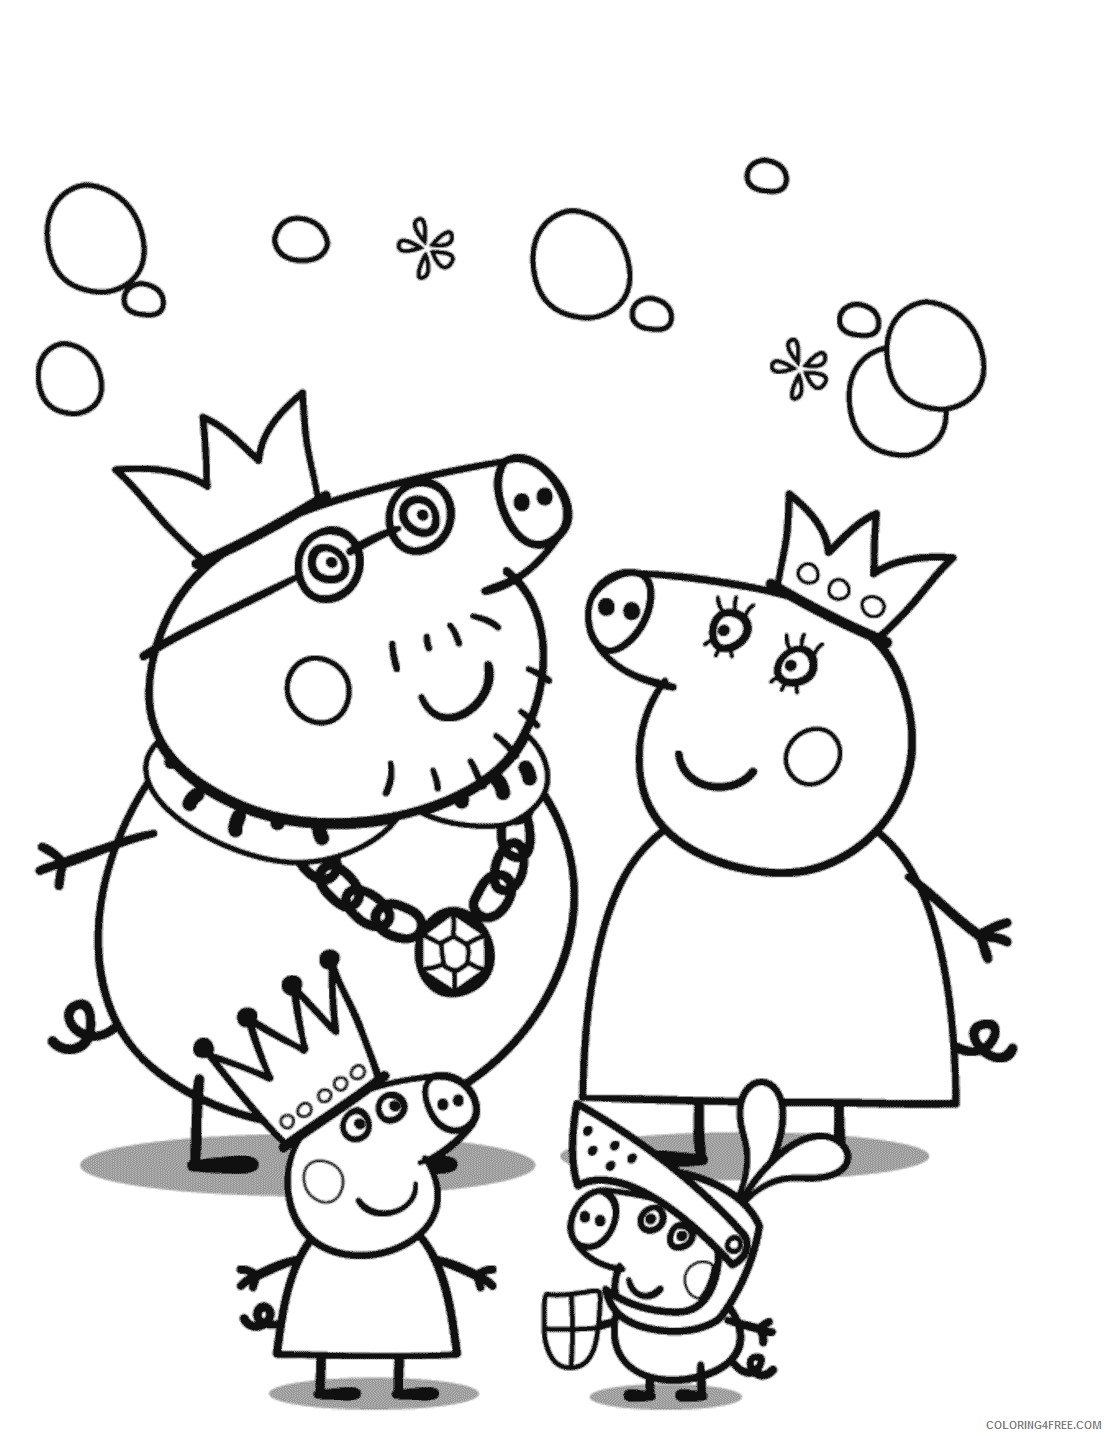 Peppa Pig Coloring Pages Cartoons 1545616551_peppa pigs royal family Printable 2020 4810 Coloring4free